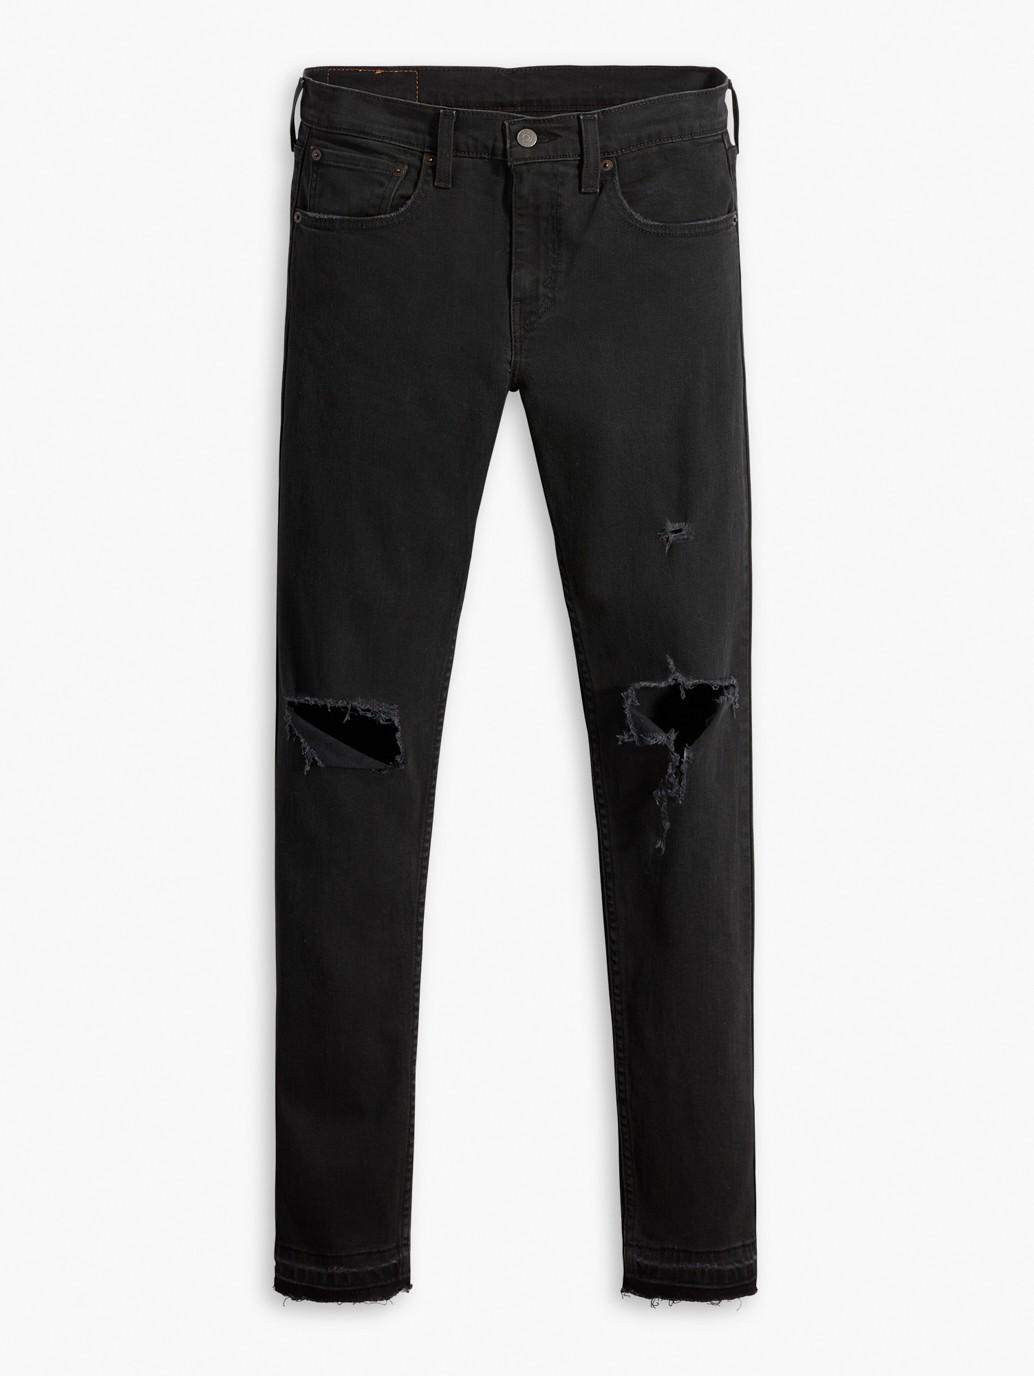 Buy Levi's® Men's Skinny Taper Jeans| Levi's® Official Online Store PH